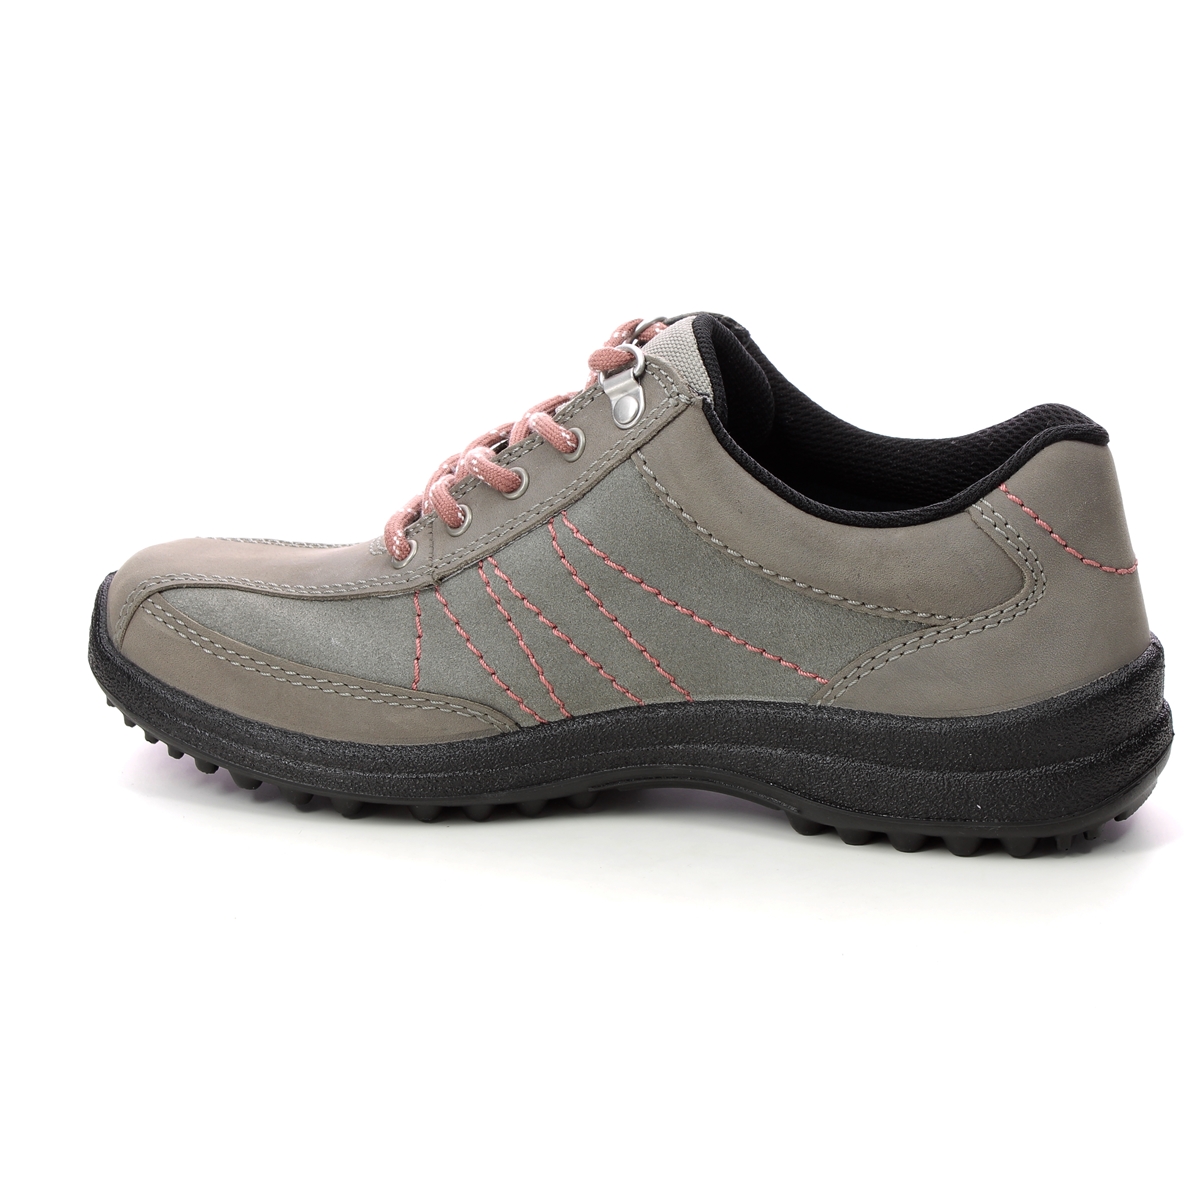 Hotter Mist Gtx Standard 1762-00 Grey leather Walking Shoes